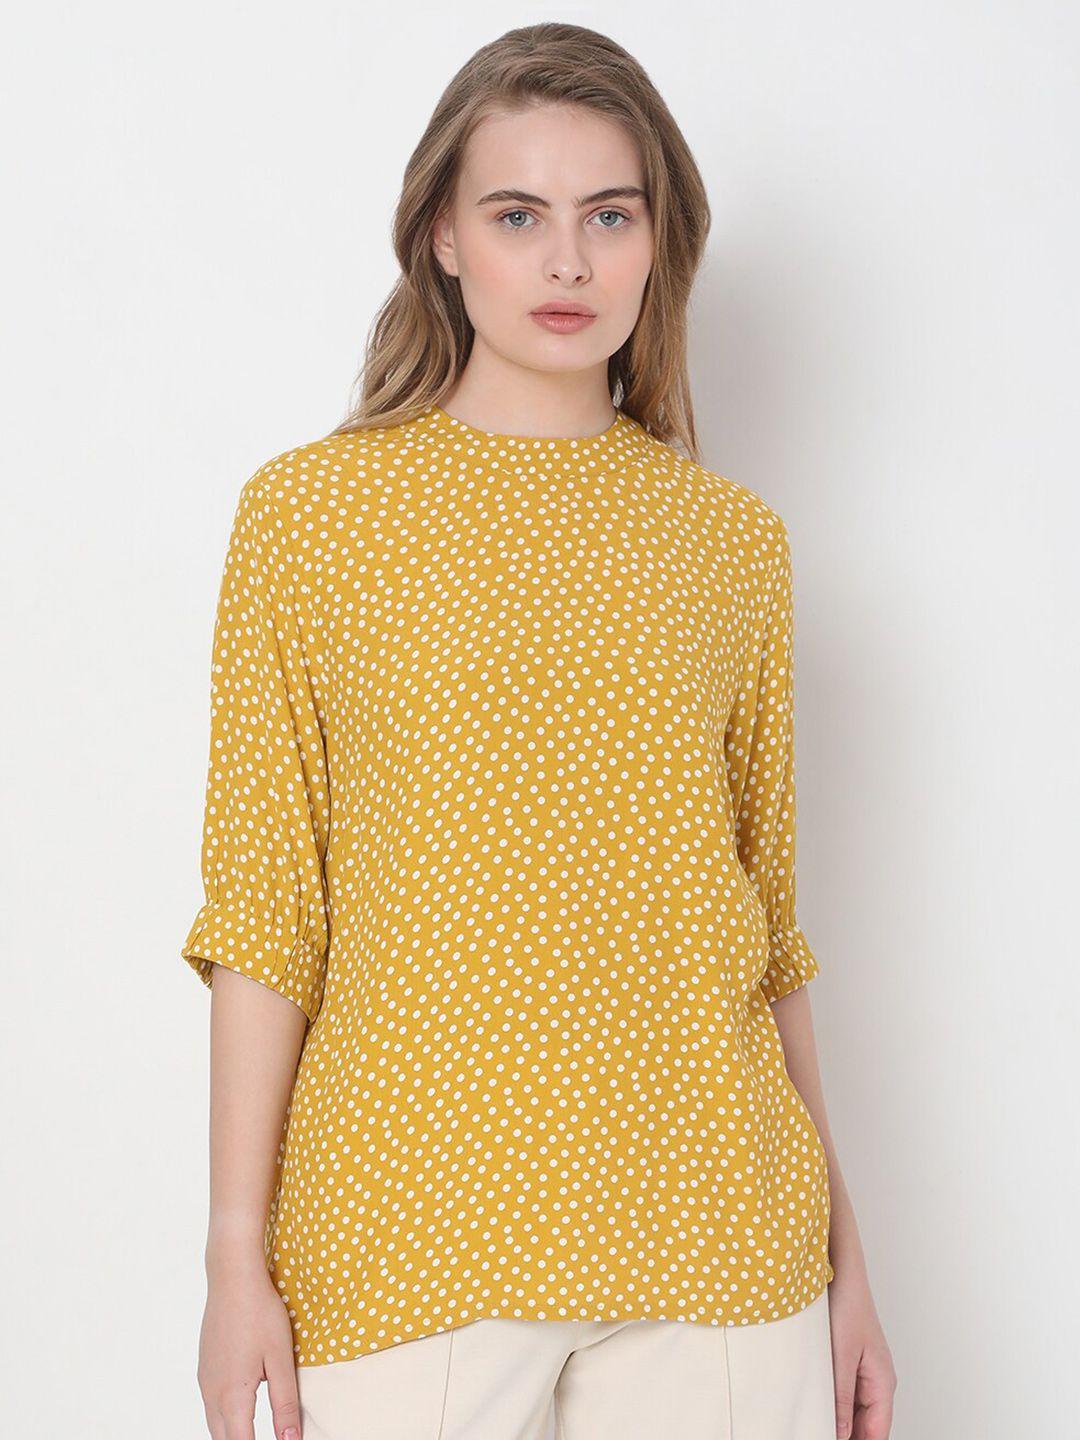 vero moda vm rityl mustard yellow printed extended sleeves top